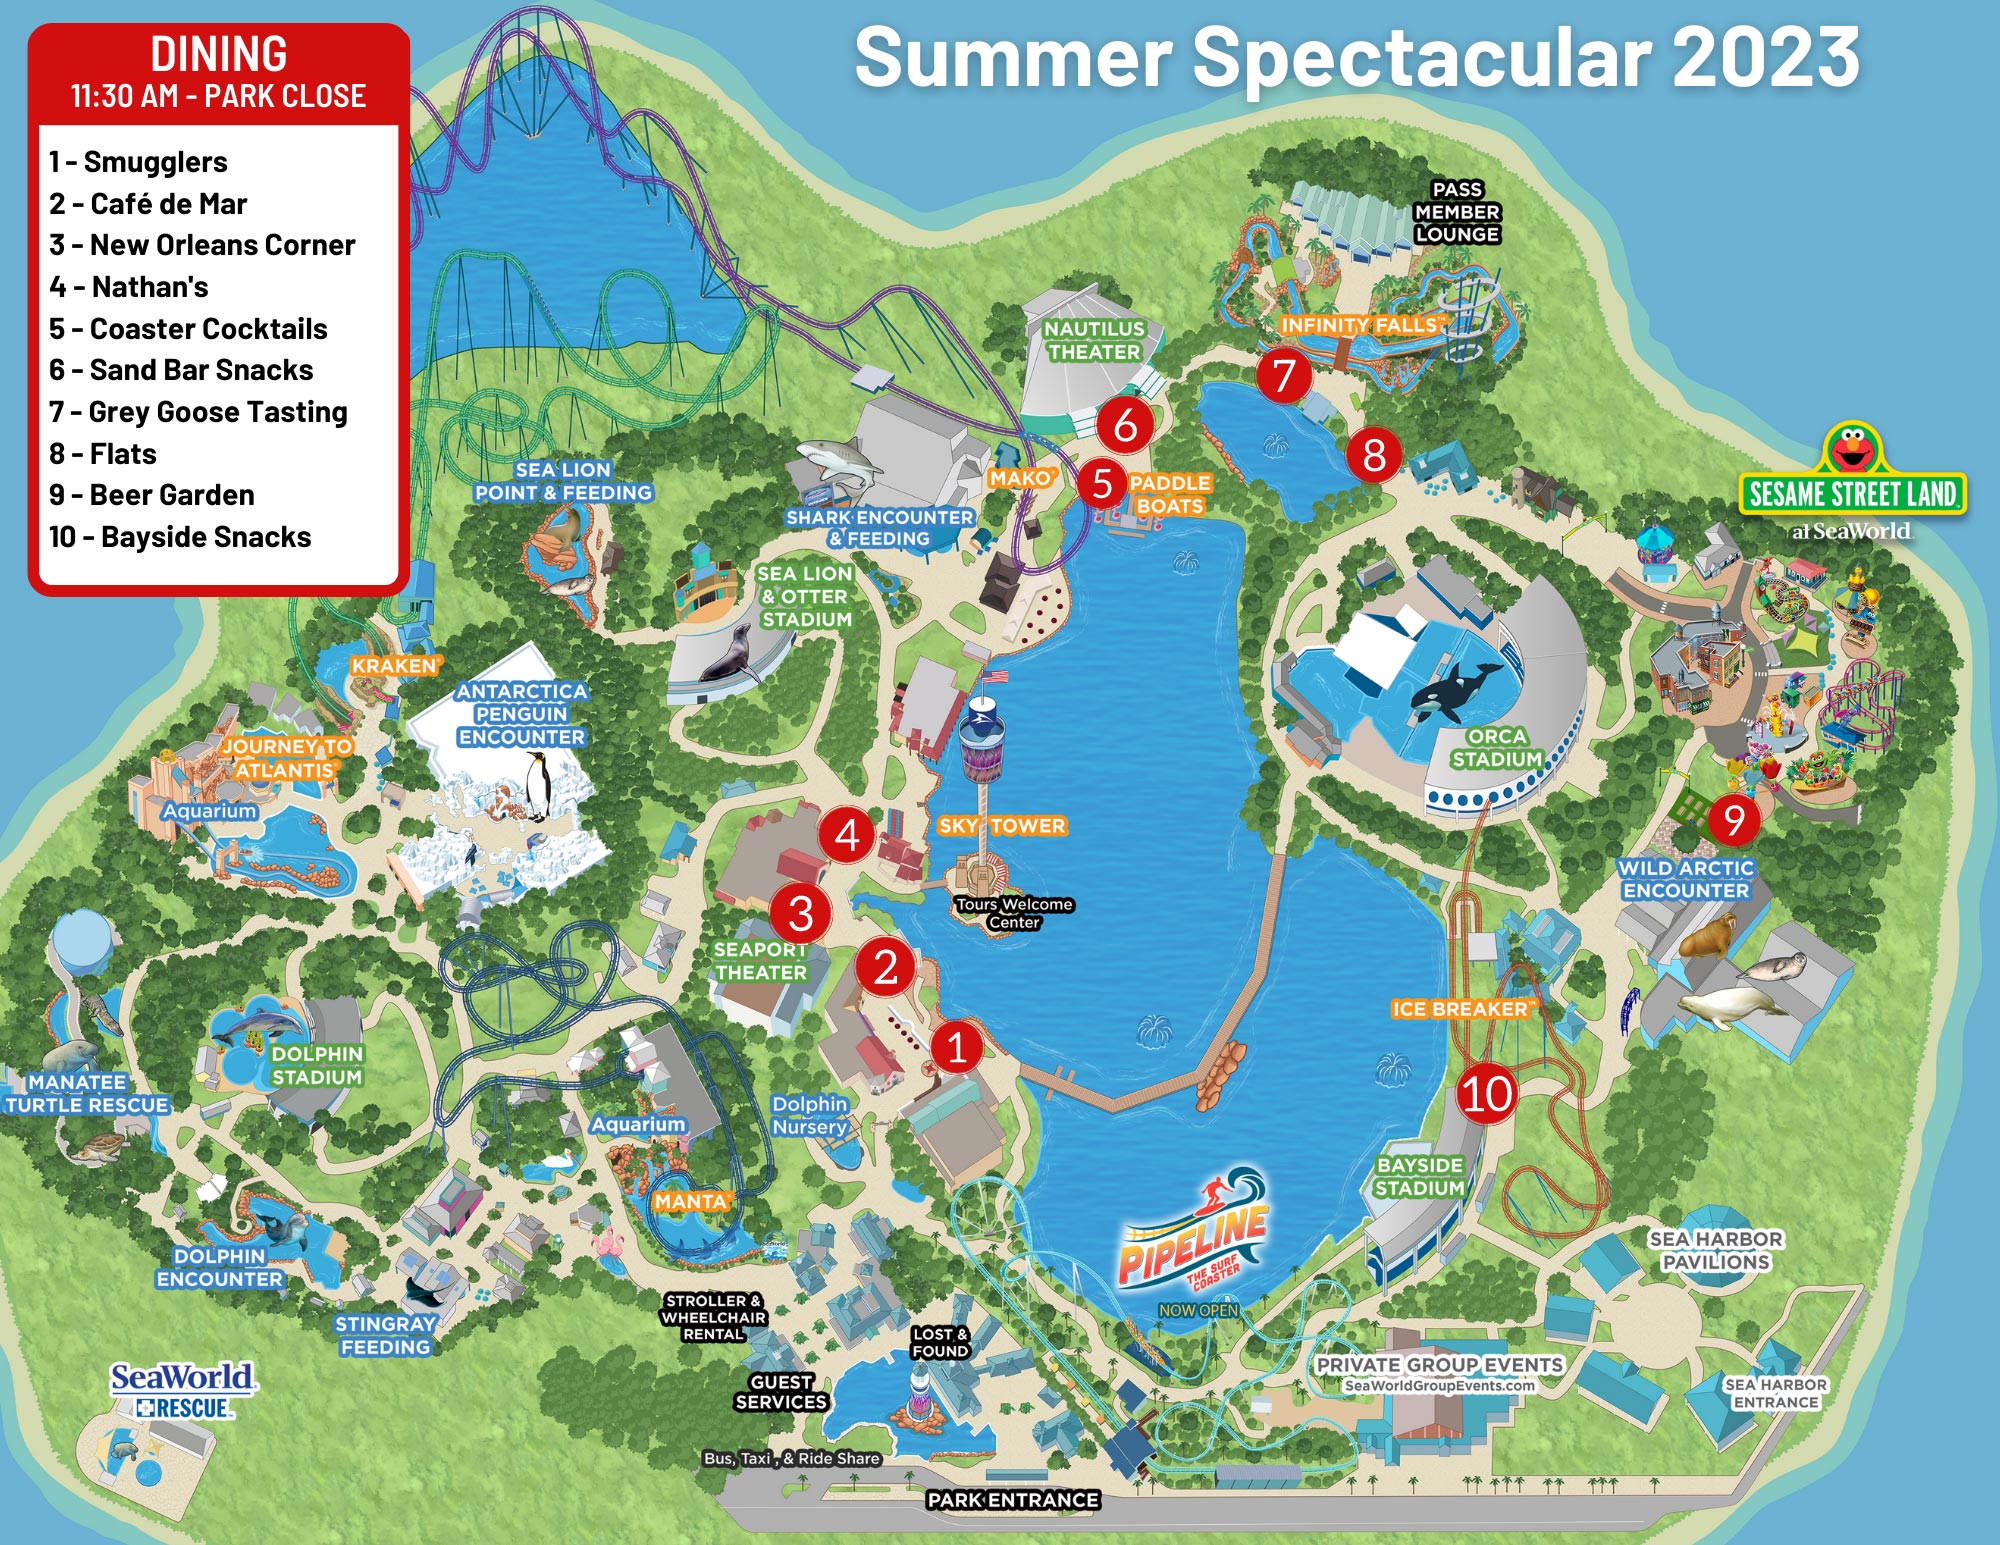 SeaWorld Orlando Summer Spectacular 2023 Event Food Booths Map